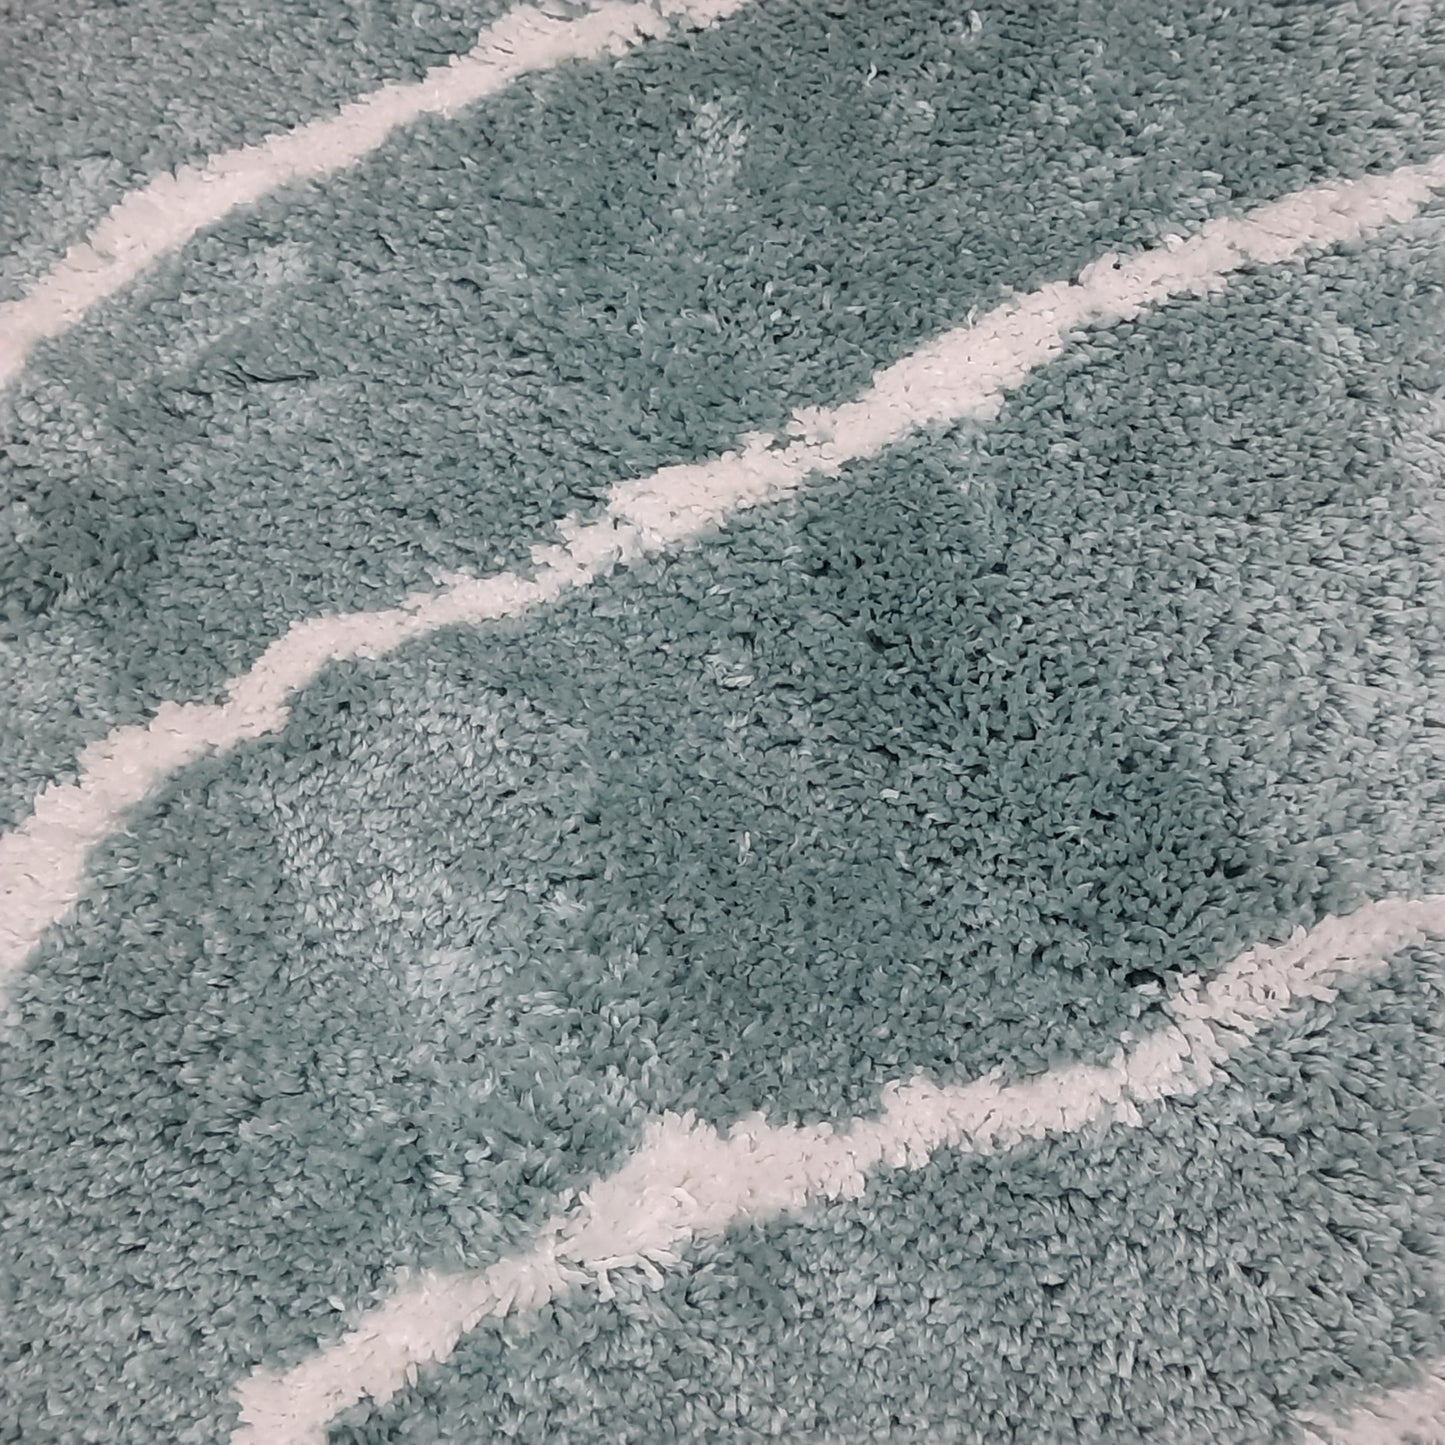 Handloom Shaggy Aqua Carpet With White Wave Design /Bedside Runners by Avioni Home